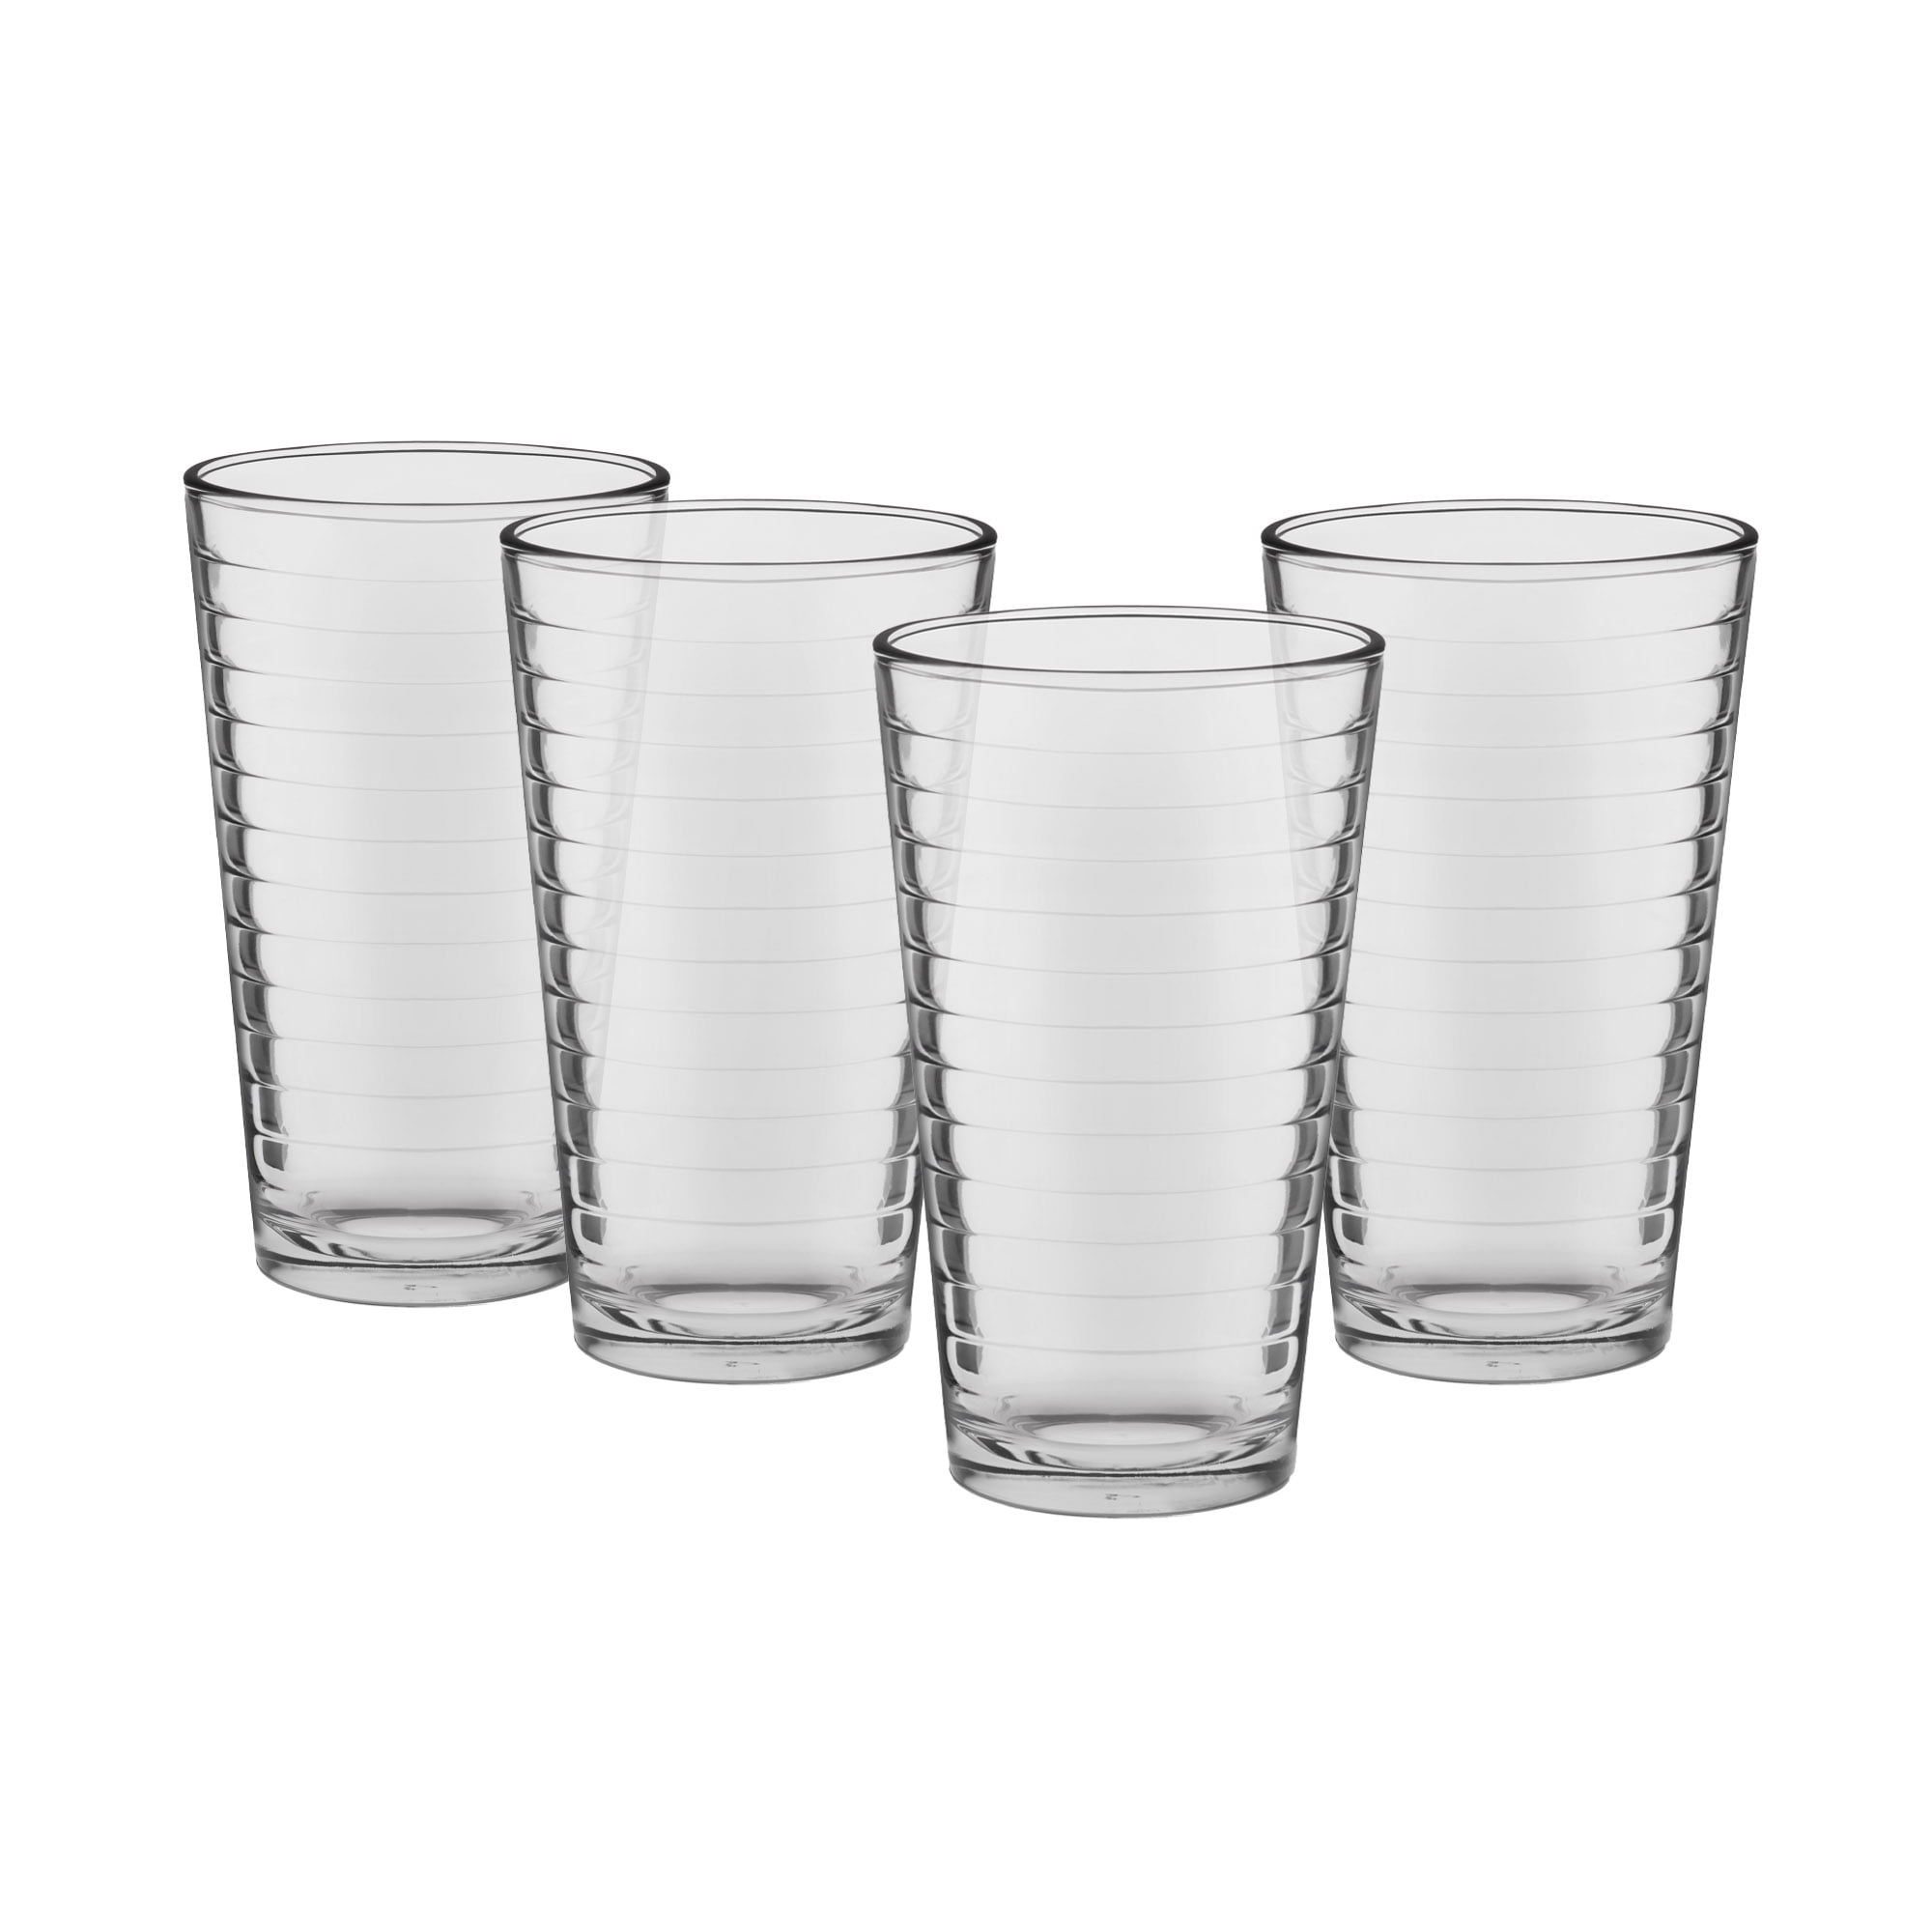 Mainstays Gallant Drinking Glasses, 16.2 oz, Set of 8 - Walmart.com